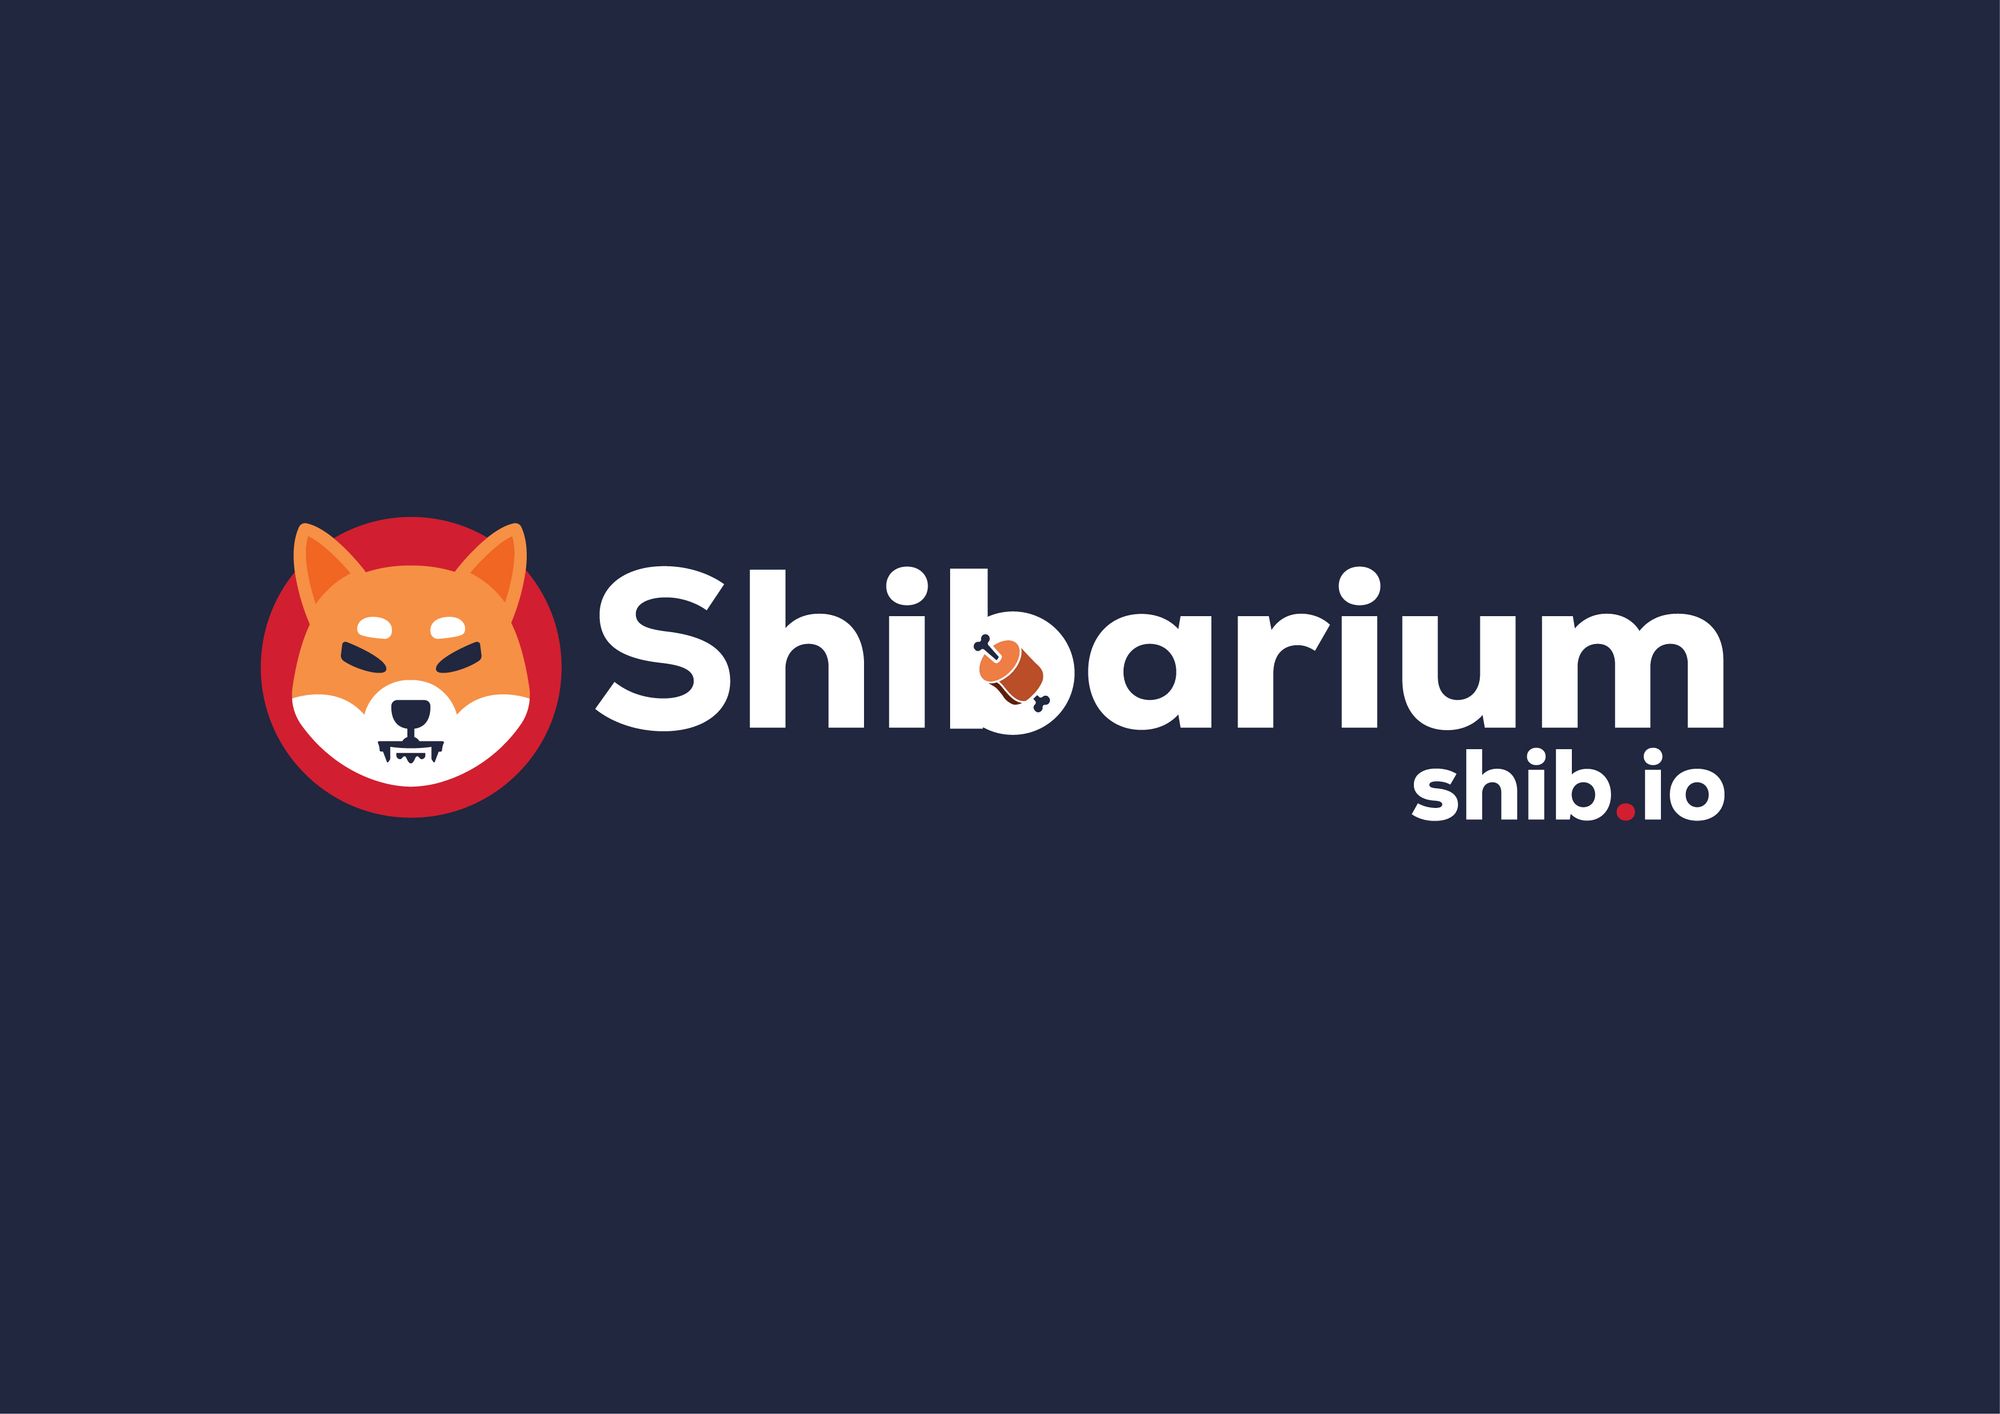 HUESO: El pasaporte al shibarium